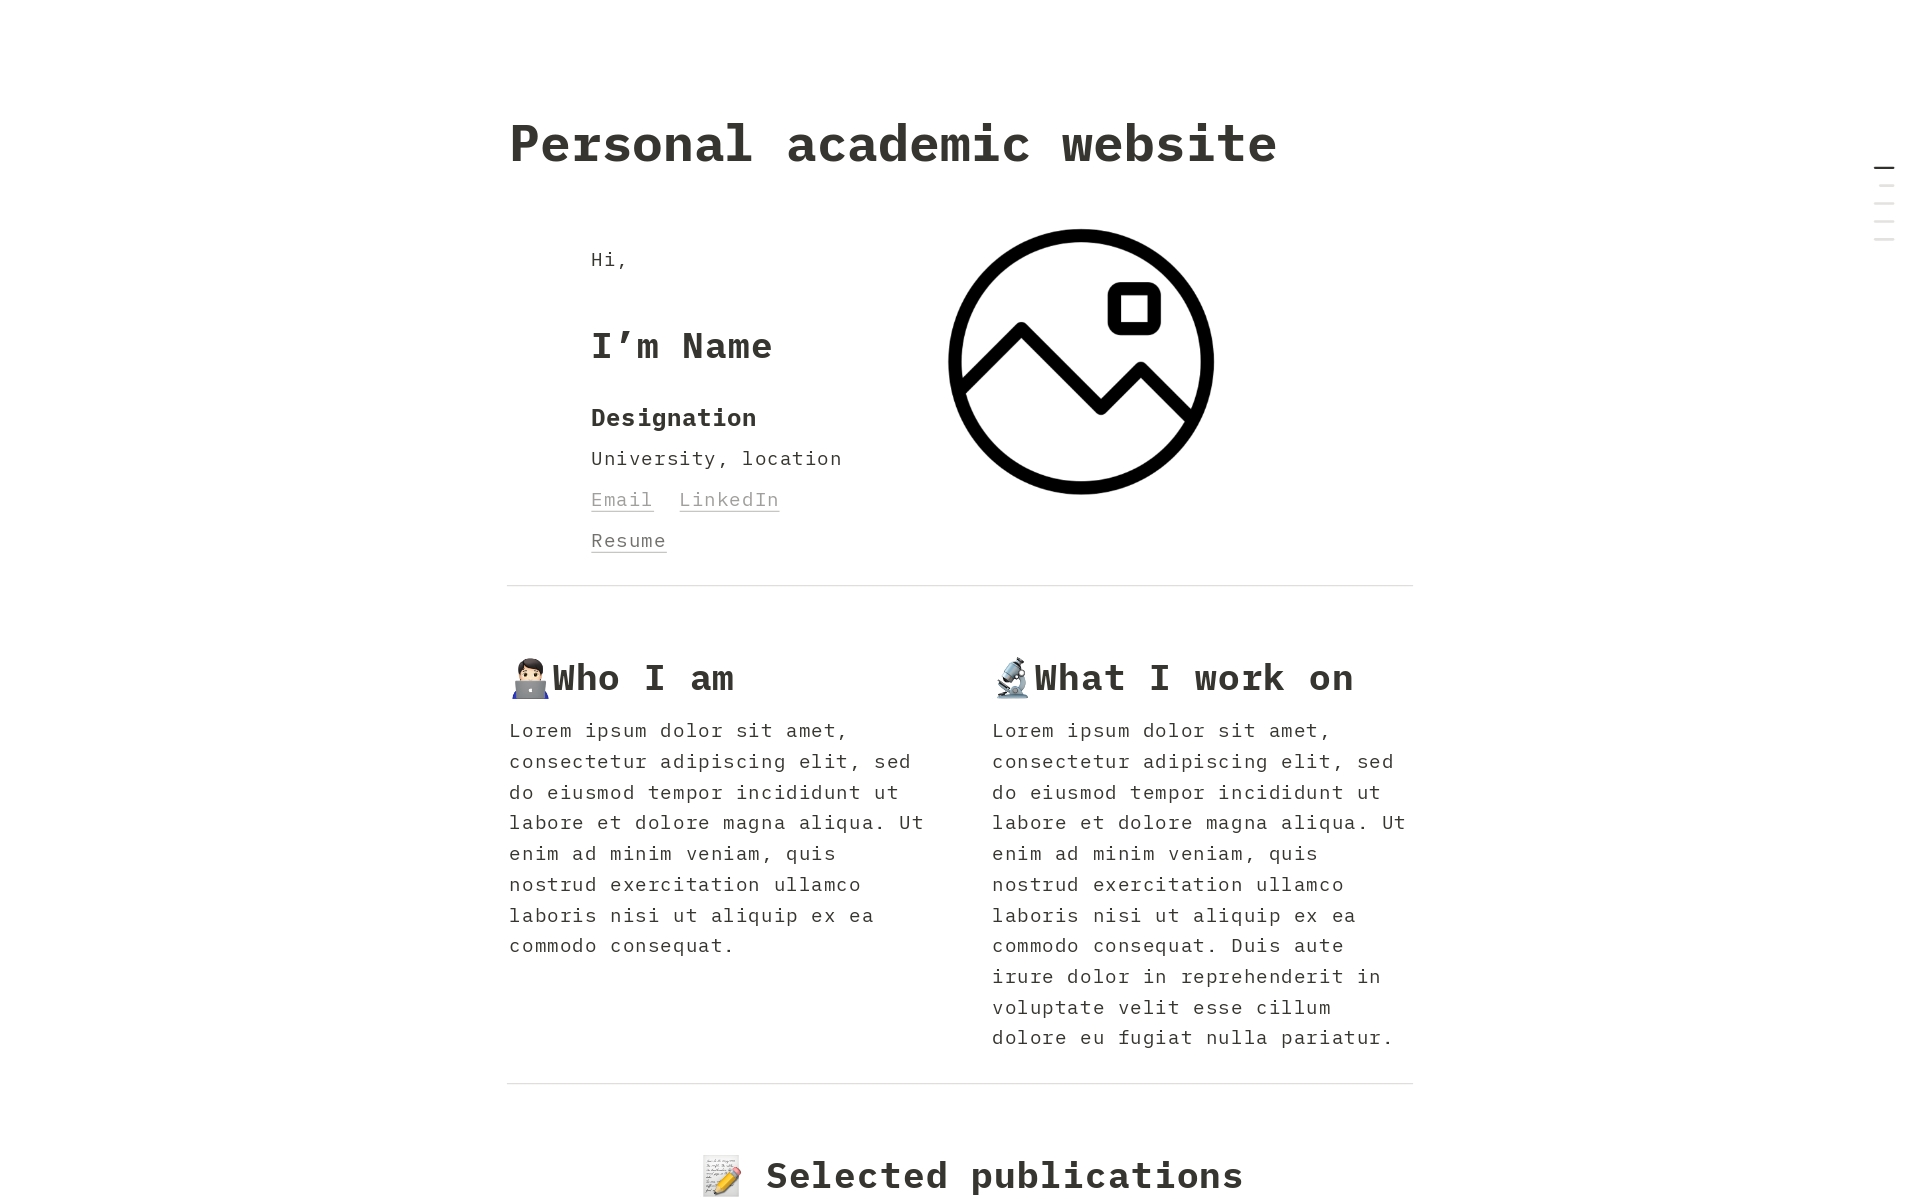 A simple portfolio website for academicians, especially PhD graduate students and undergrads.